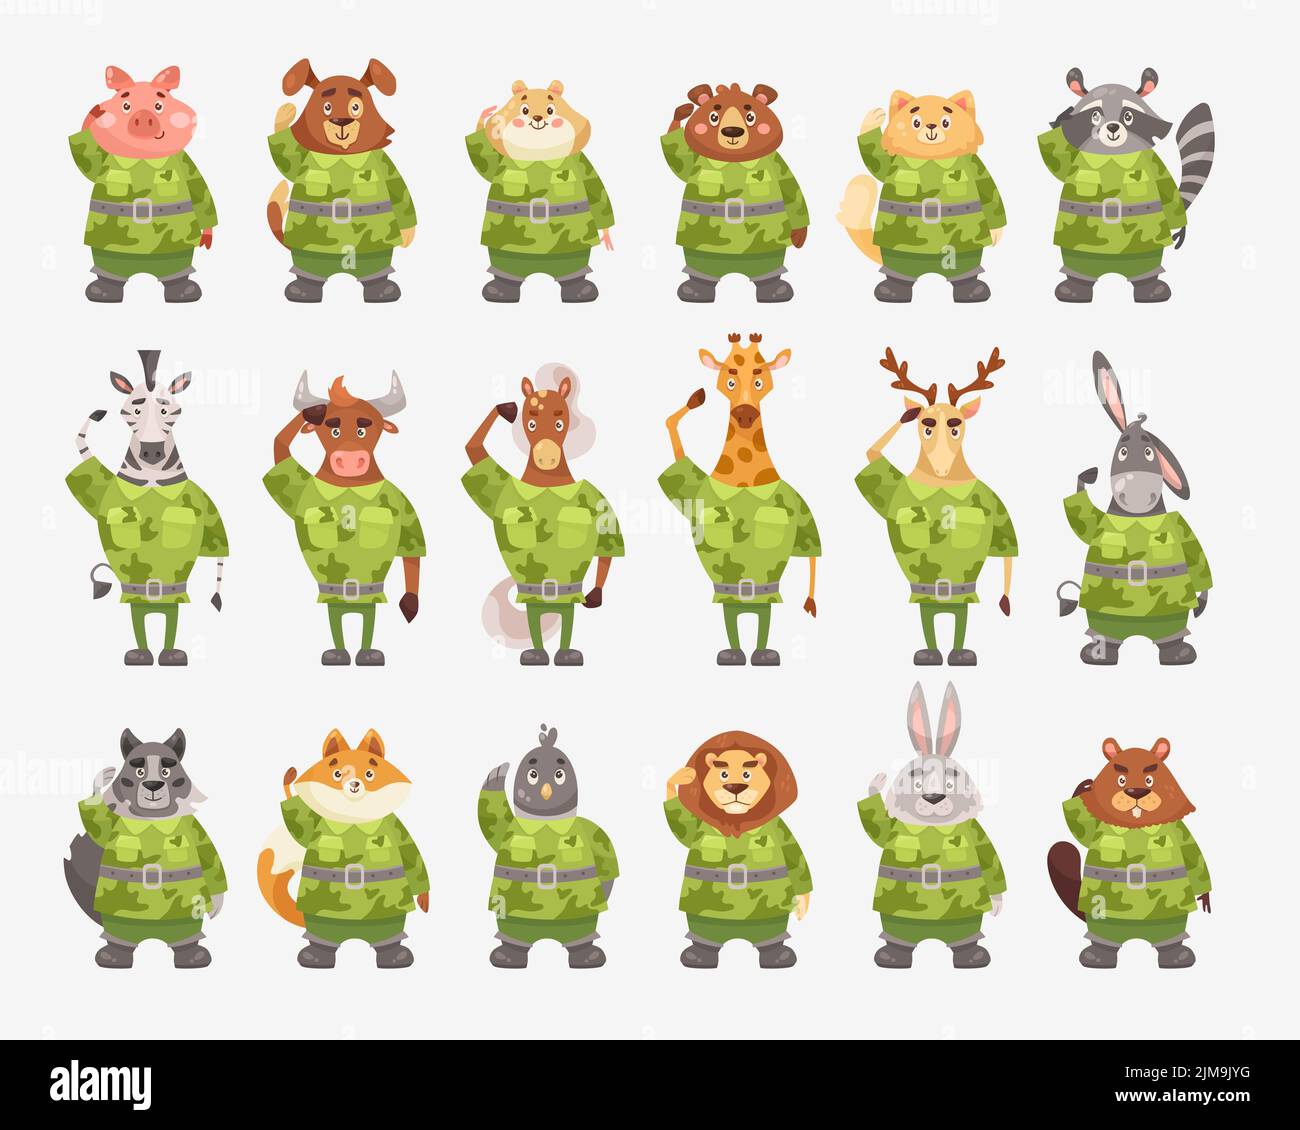 Cute animal soldiers in camouflage cartoon illustration set. Serious pig, dog, giraffe, beaver, bear, zebra, cat, lion in military uniform saluting of Stock Vector